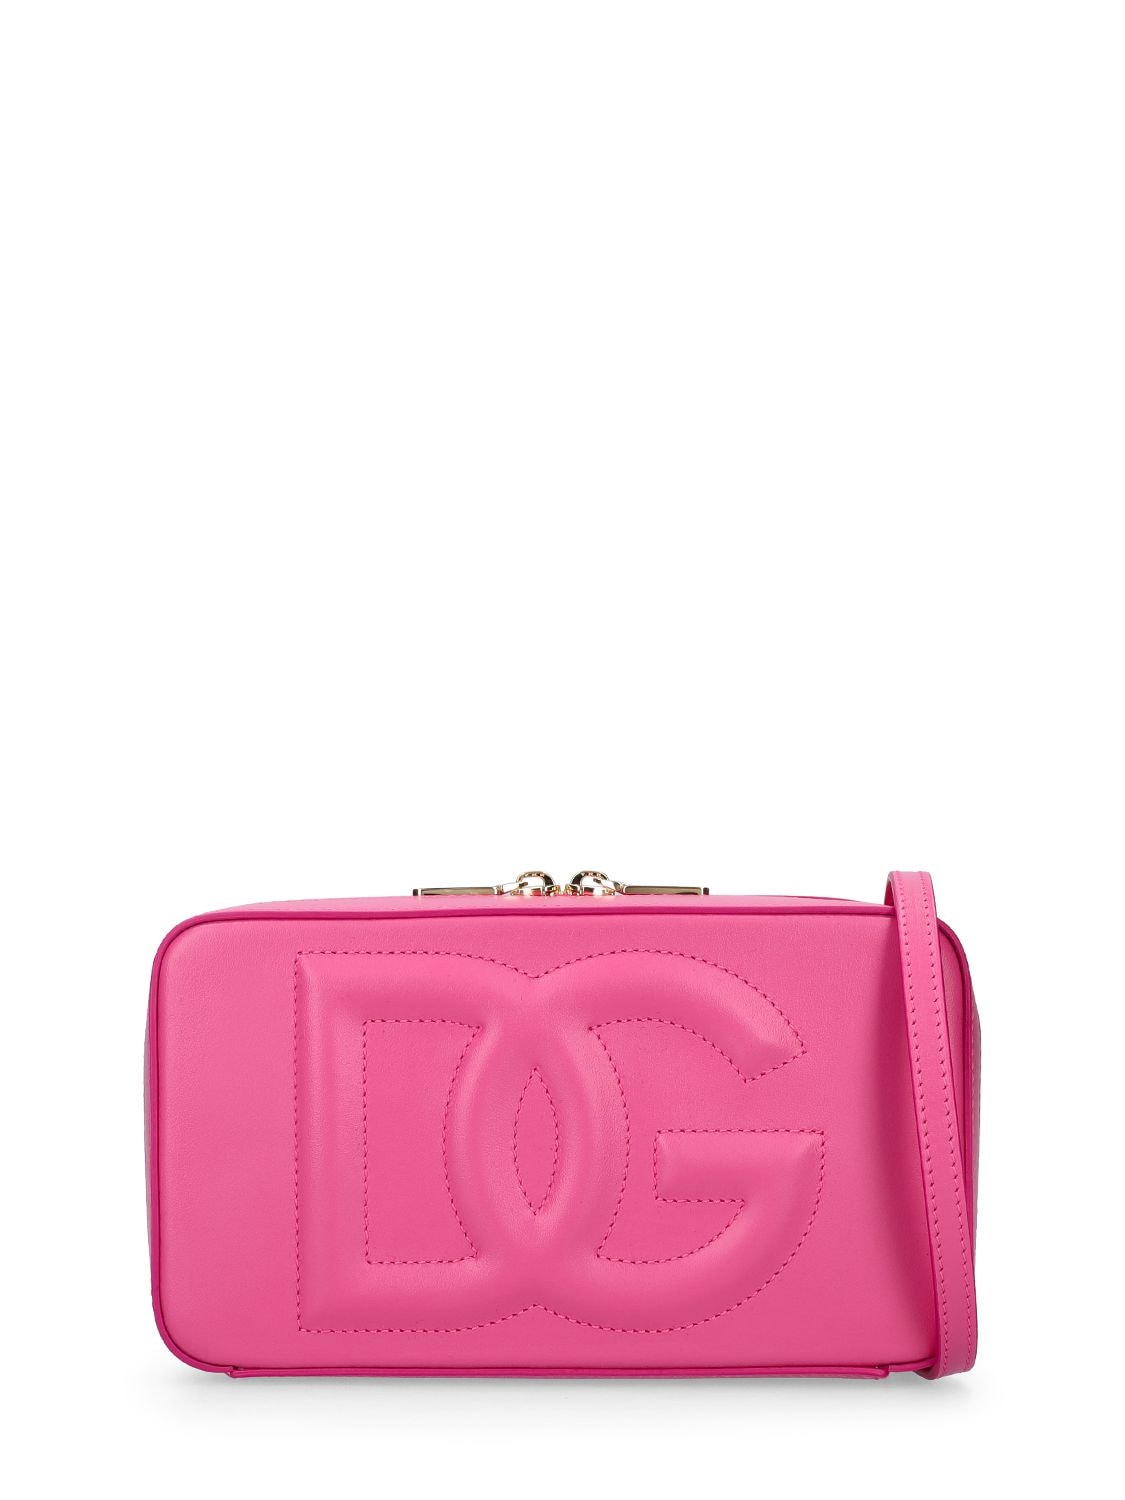 Dolce & Gabbana Dg Leather Camera Bag In Pink | ModeSens